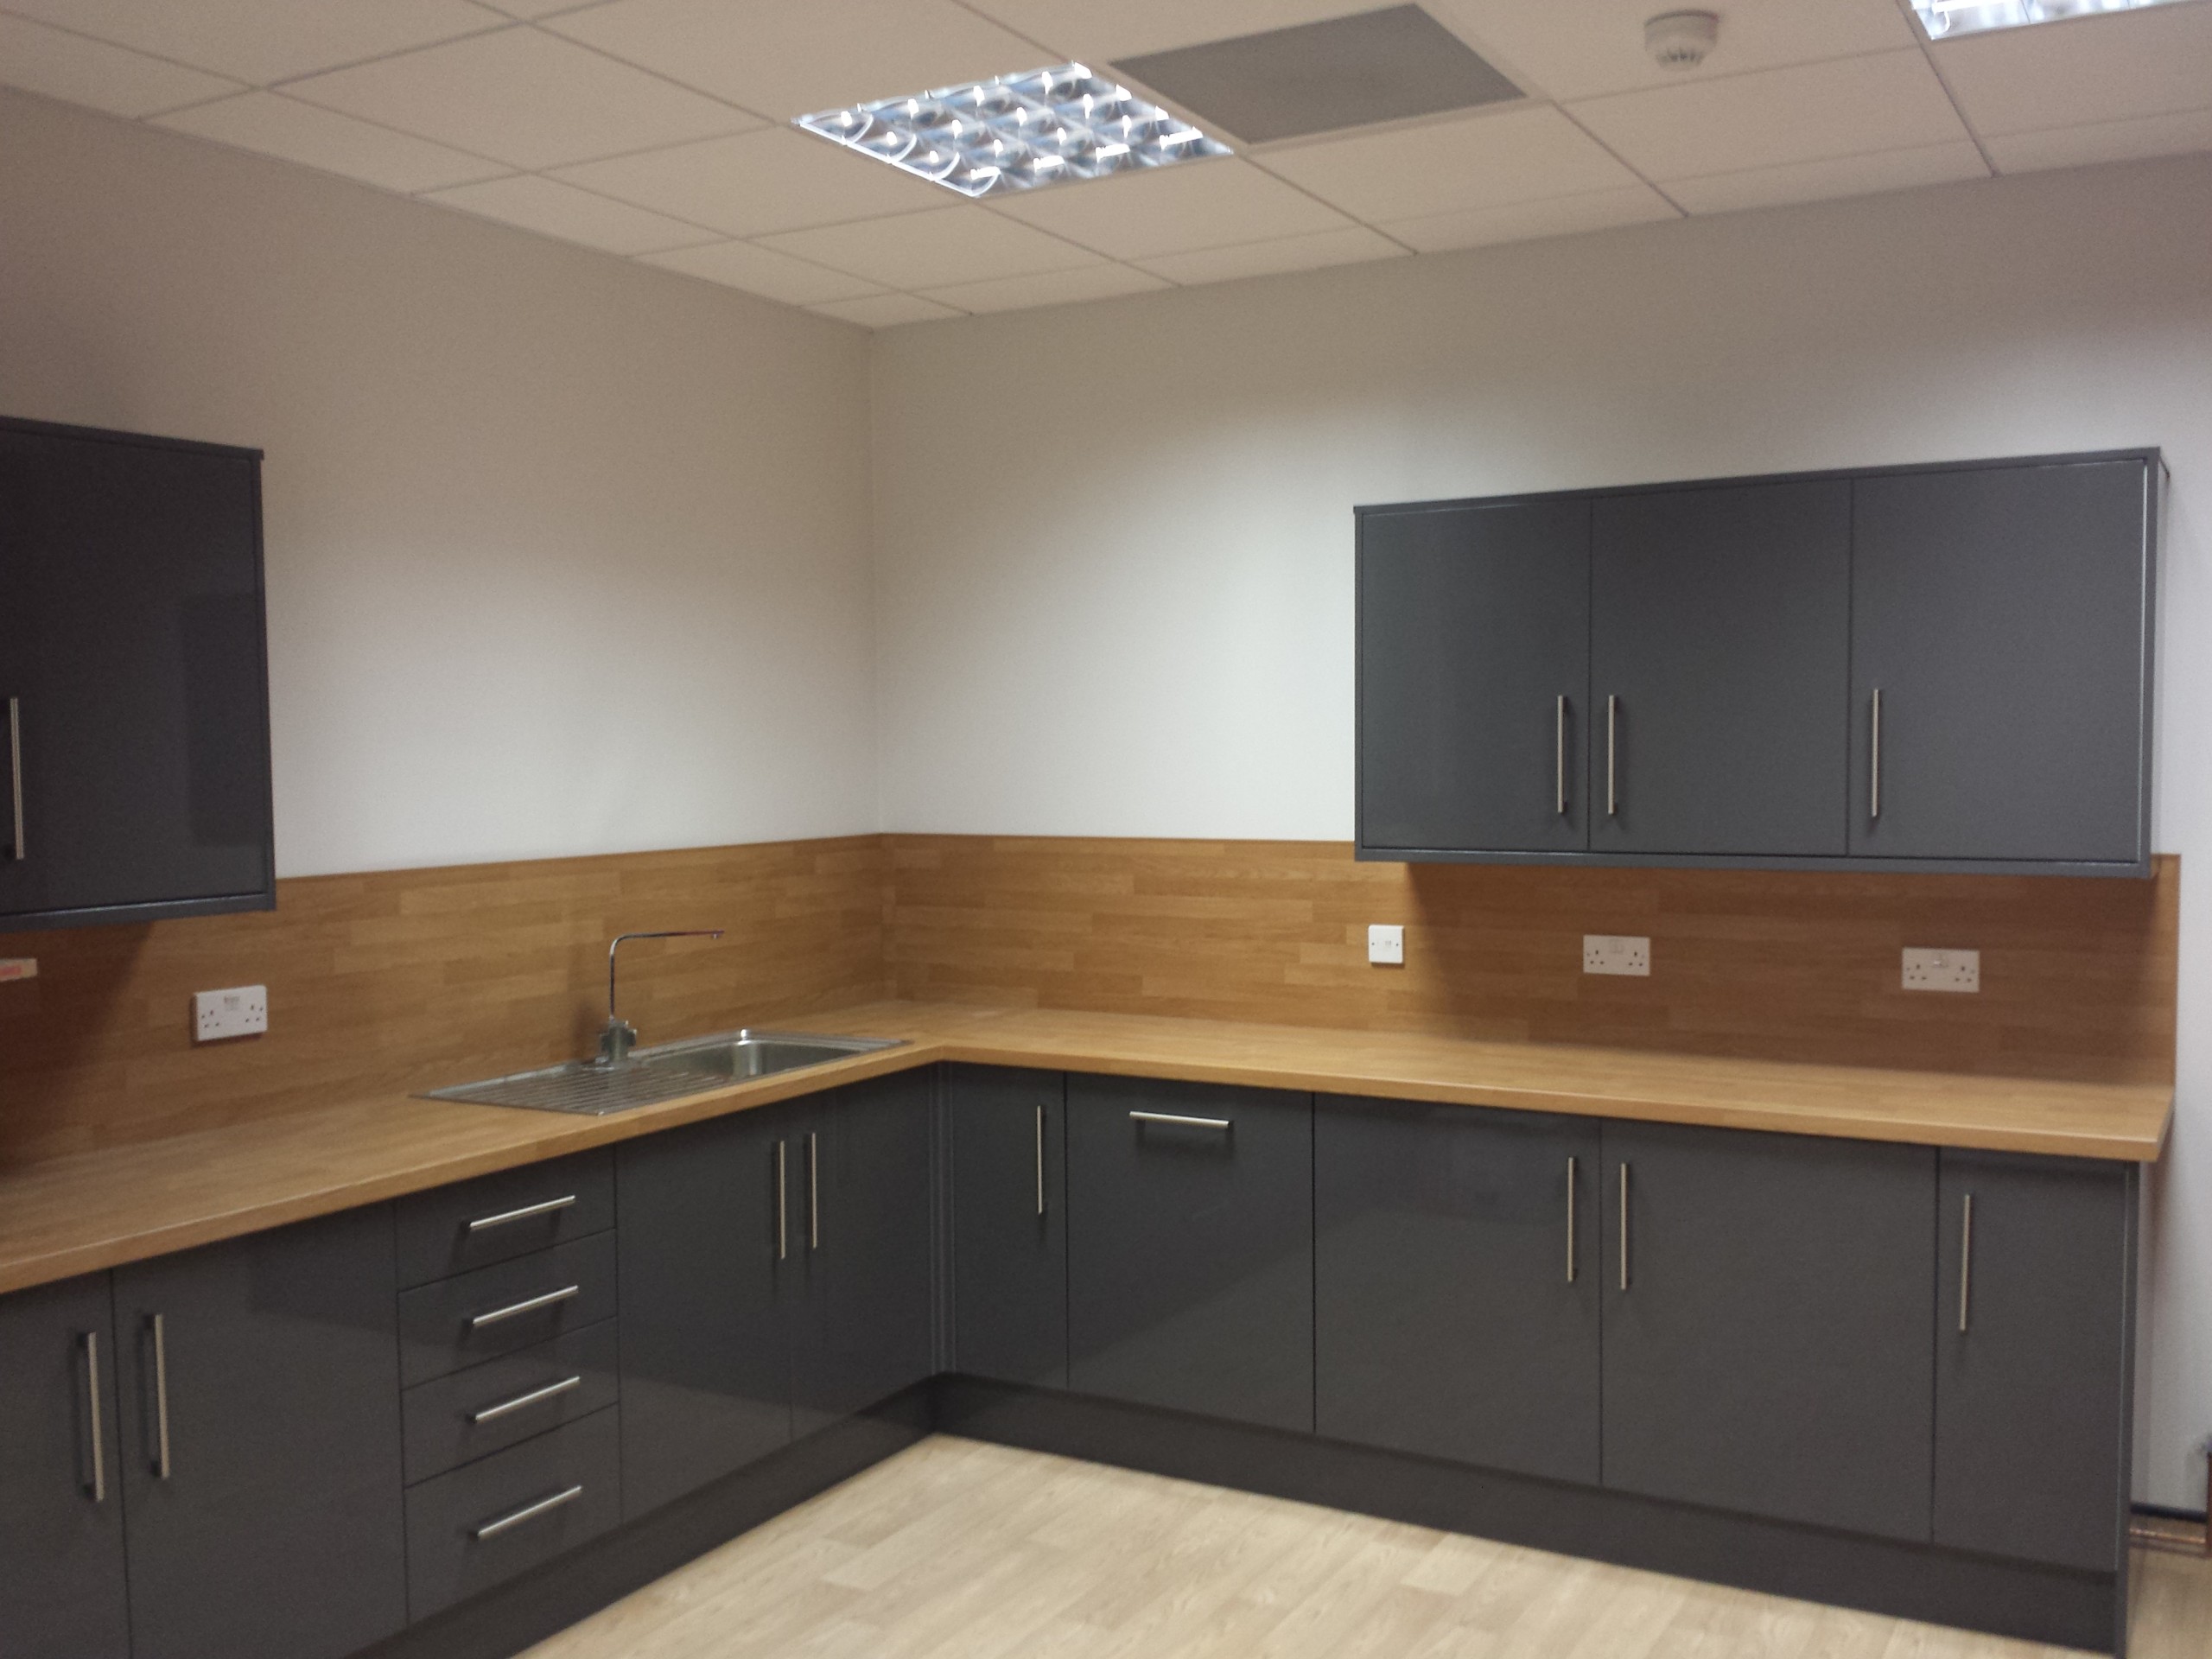 Kitchen renovation in sutton coldfield, birmingham, aldridge, walsall, streetly